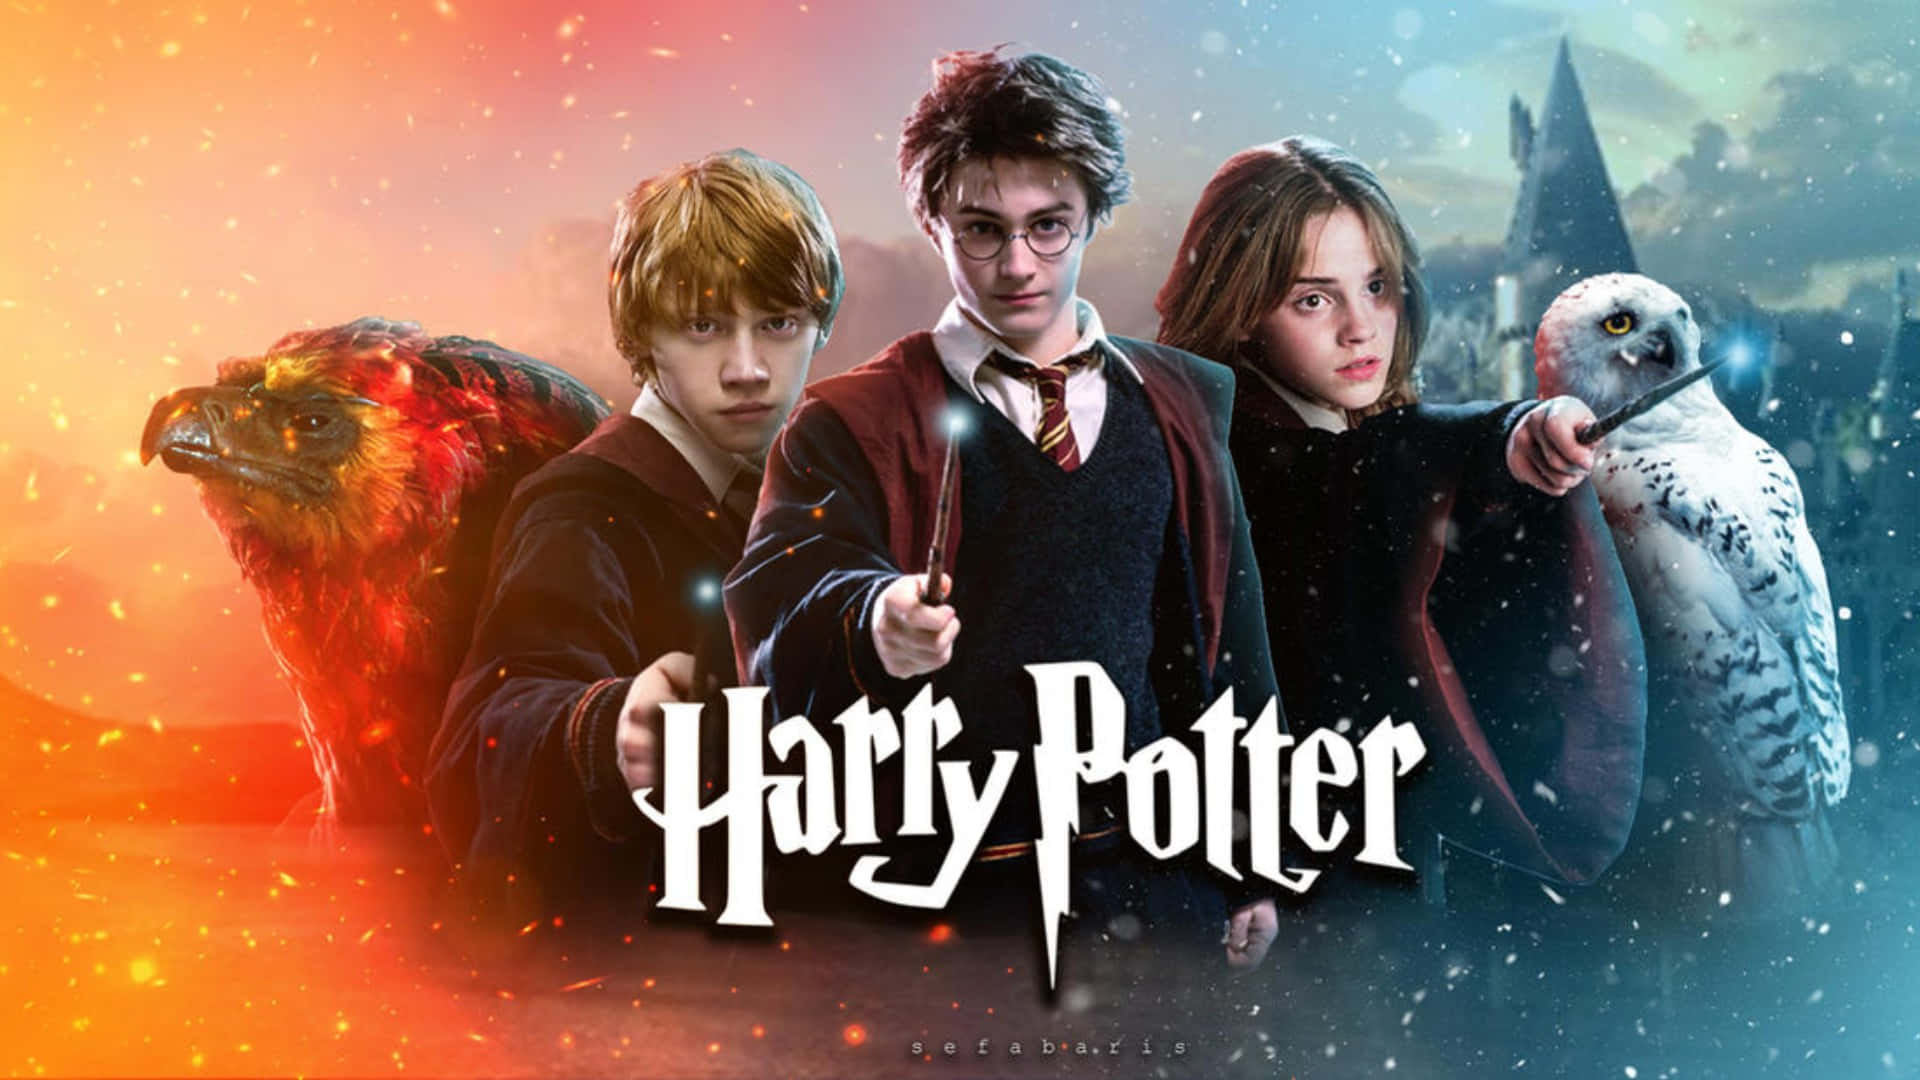 Hogwarts❤  Harry potter wallpaper, Harry potter poster, Harry potter  background